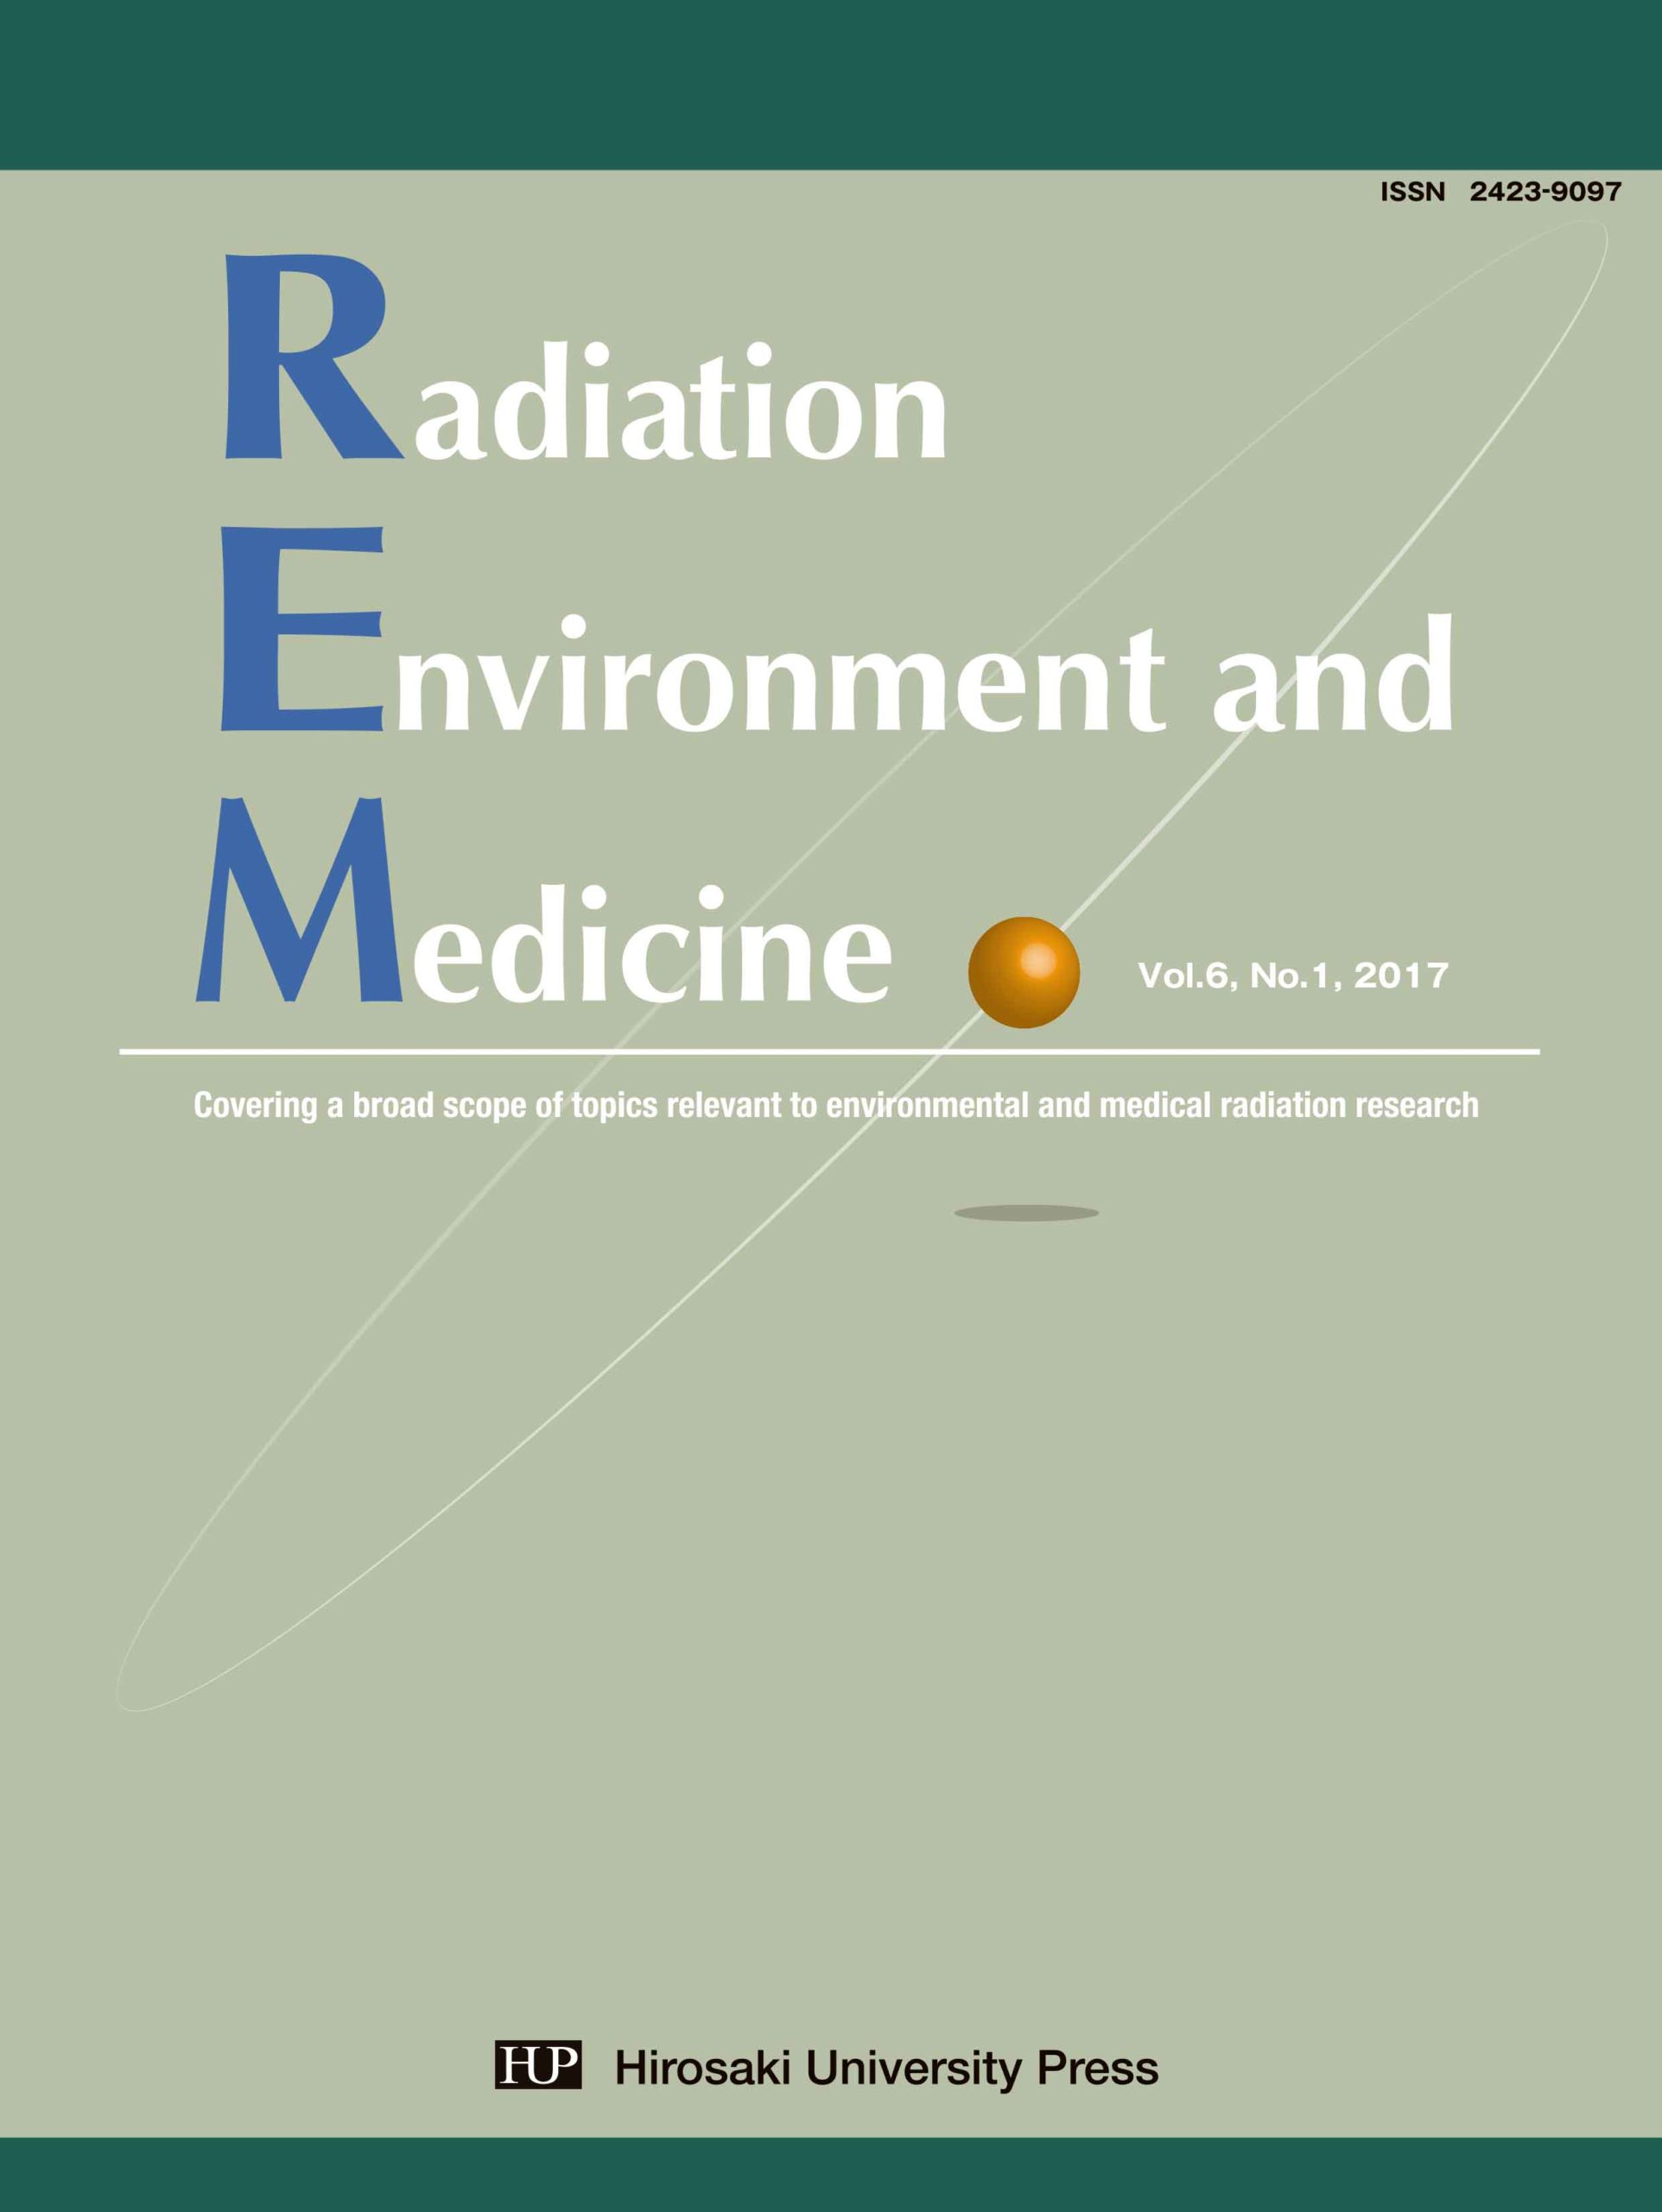 Radiation Environment and Medicine Vol.6, No.1 cover